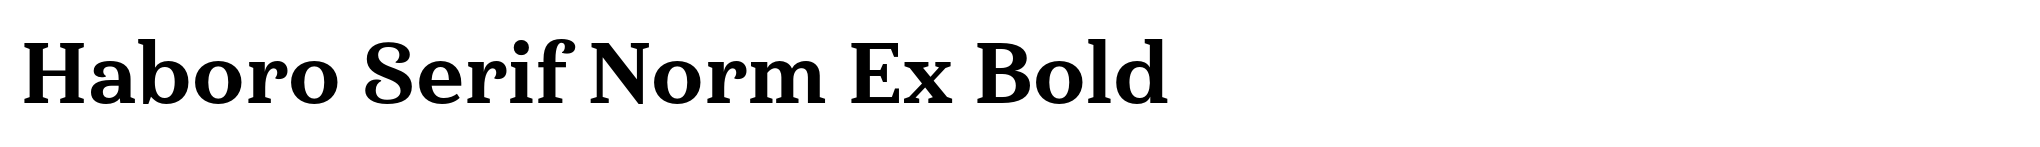 Haboro Serif Norm Ex Bold image